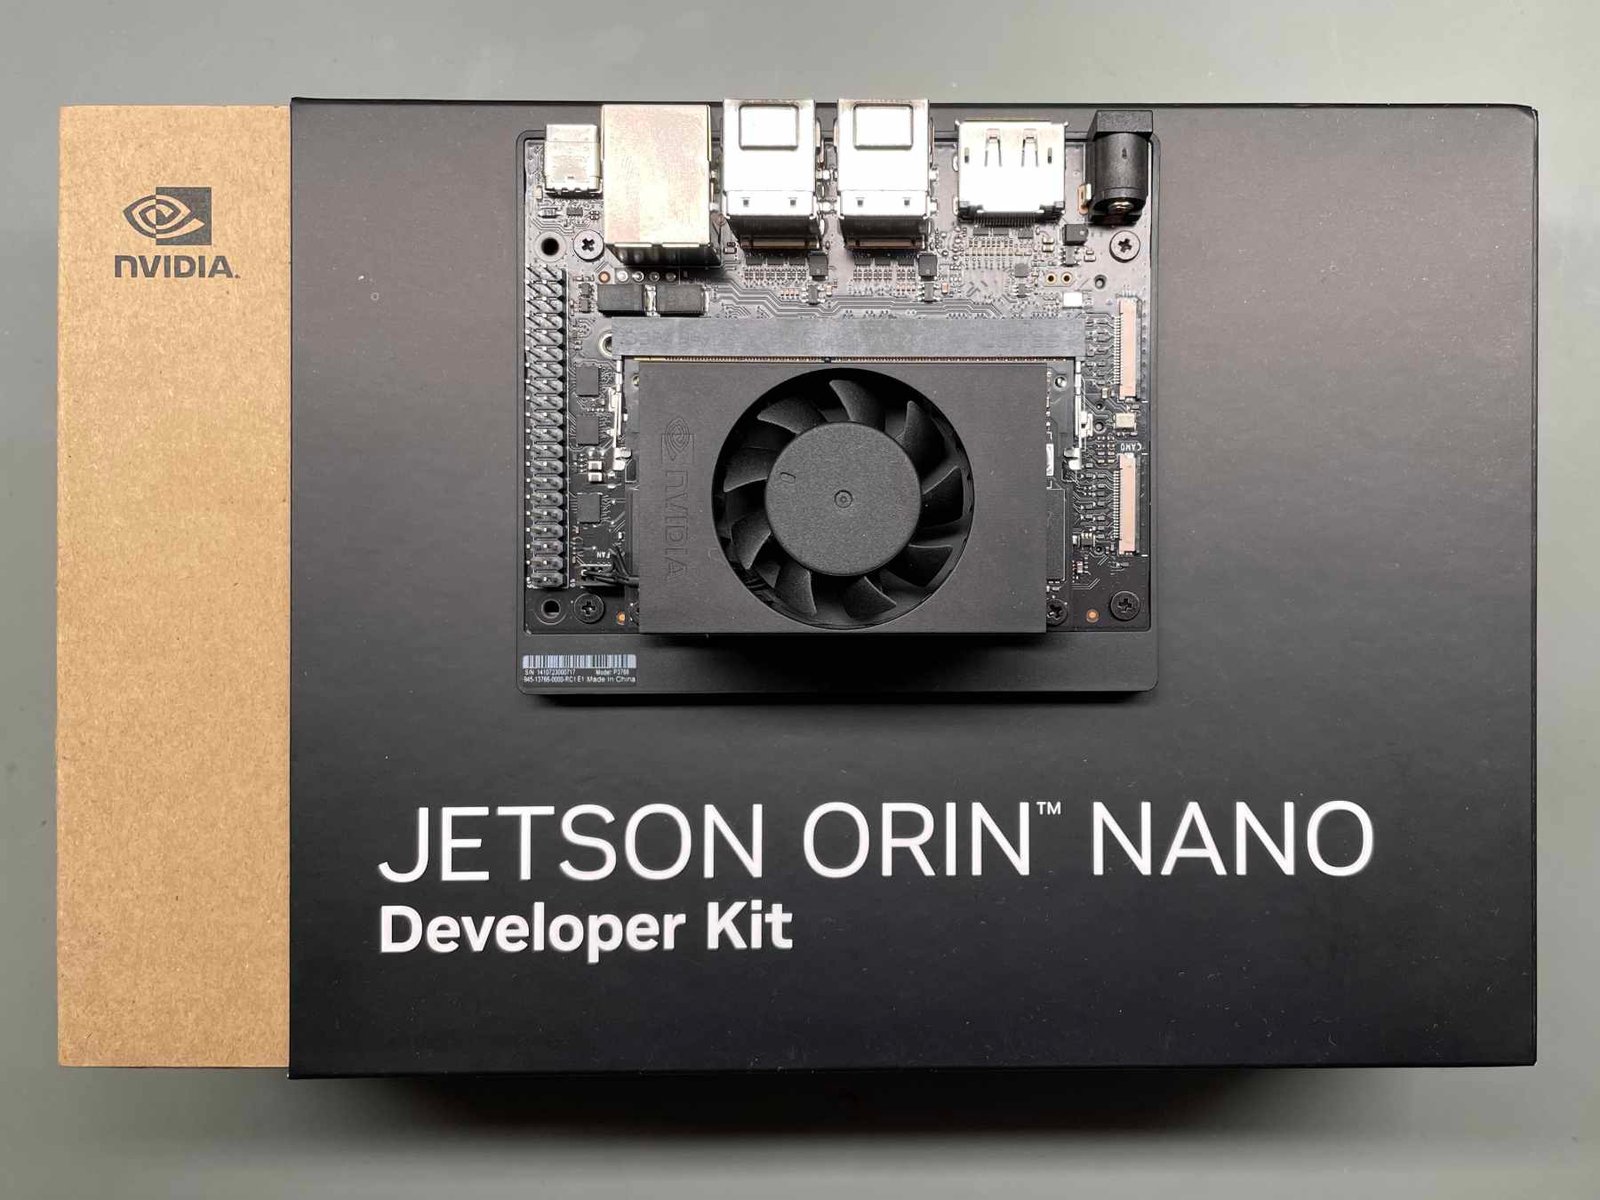 Jetson Orin Nano on its box